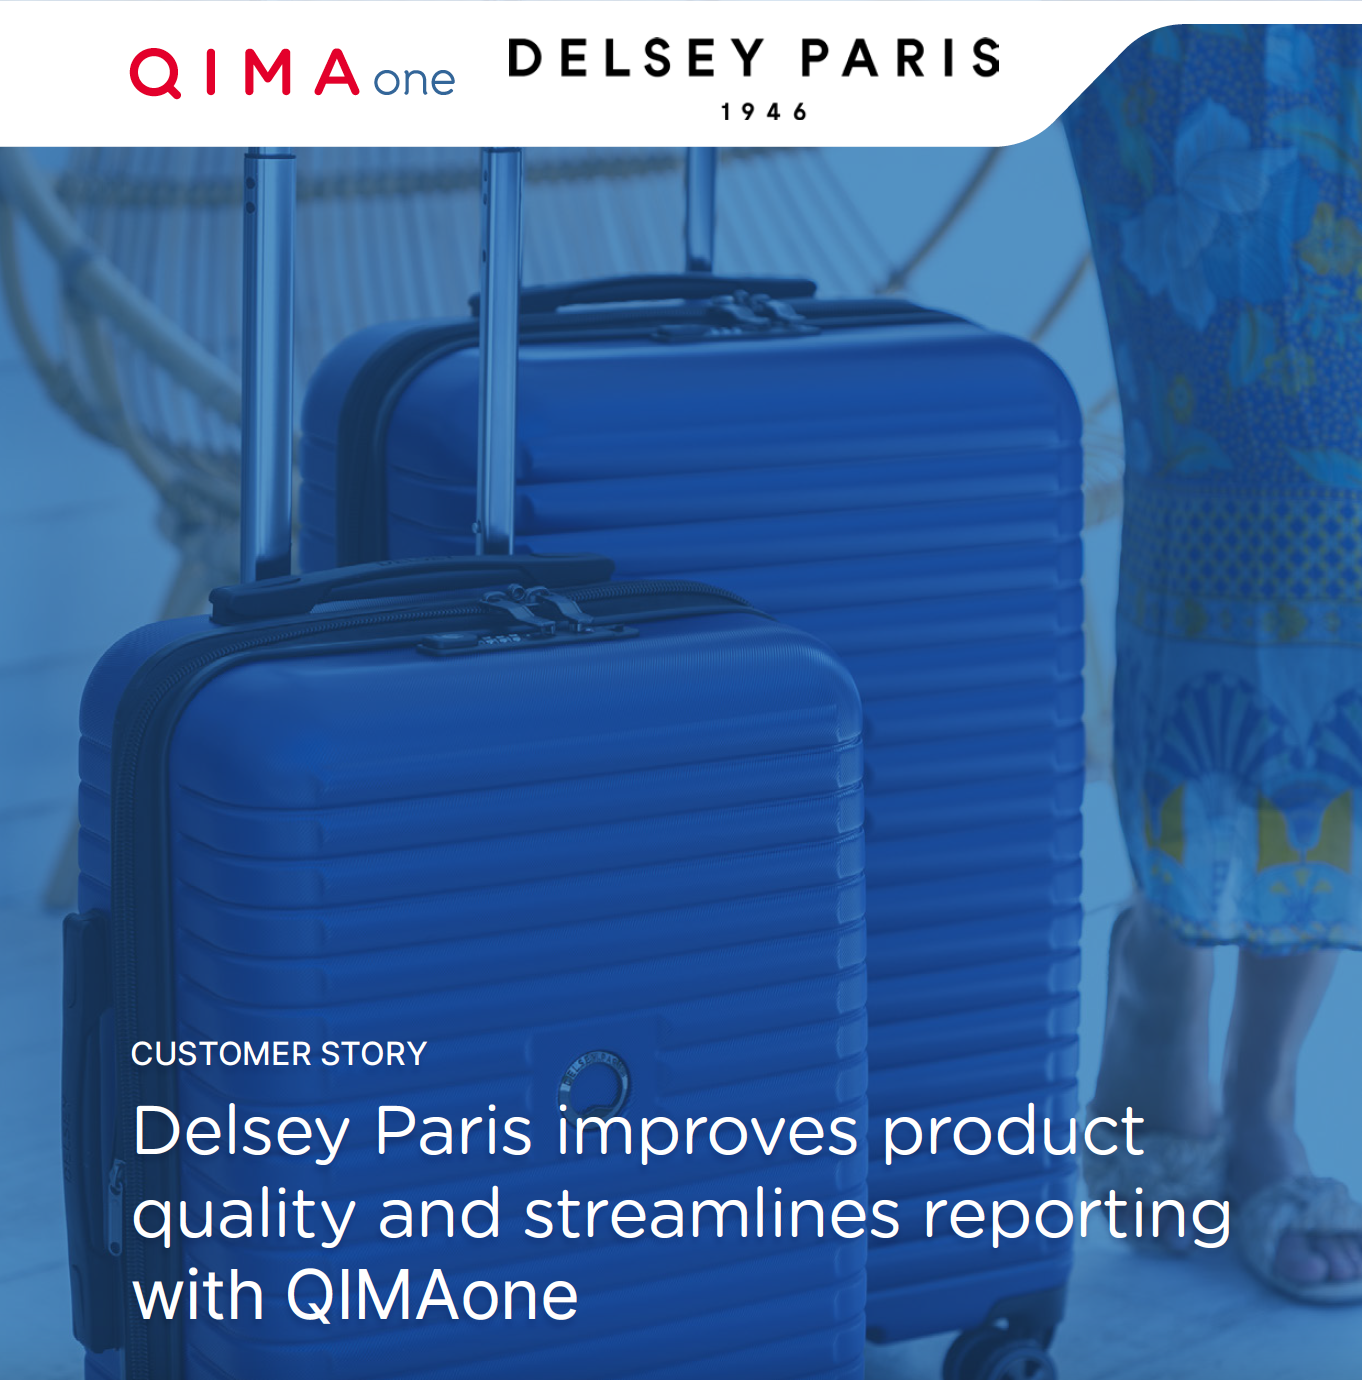 Delsey Paris 利用 QIMAone 提高产品质量并简化报告流程